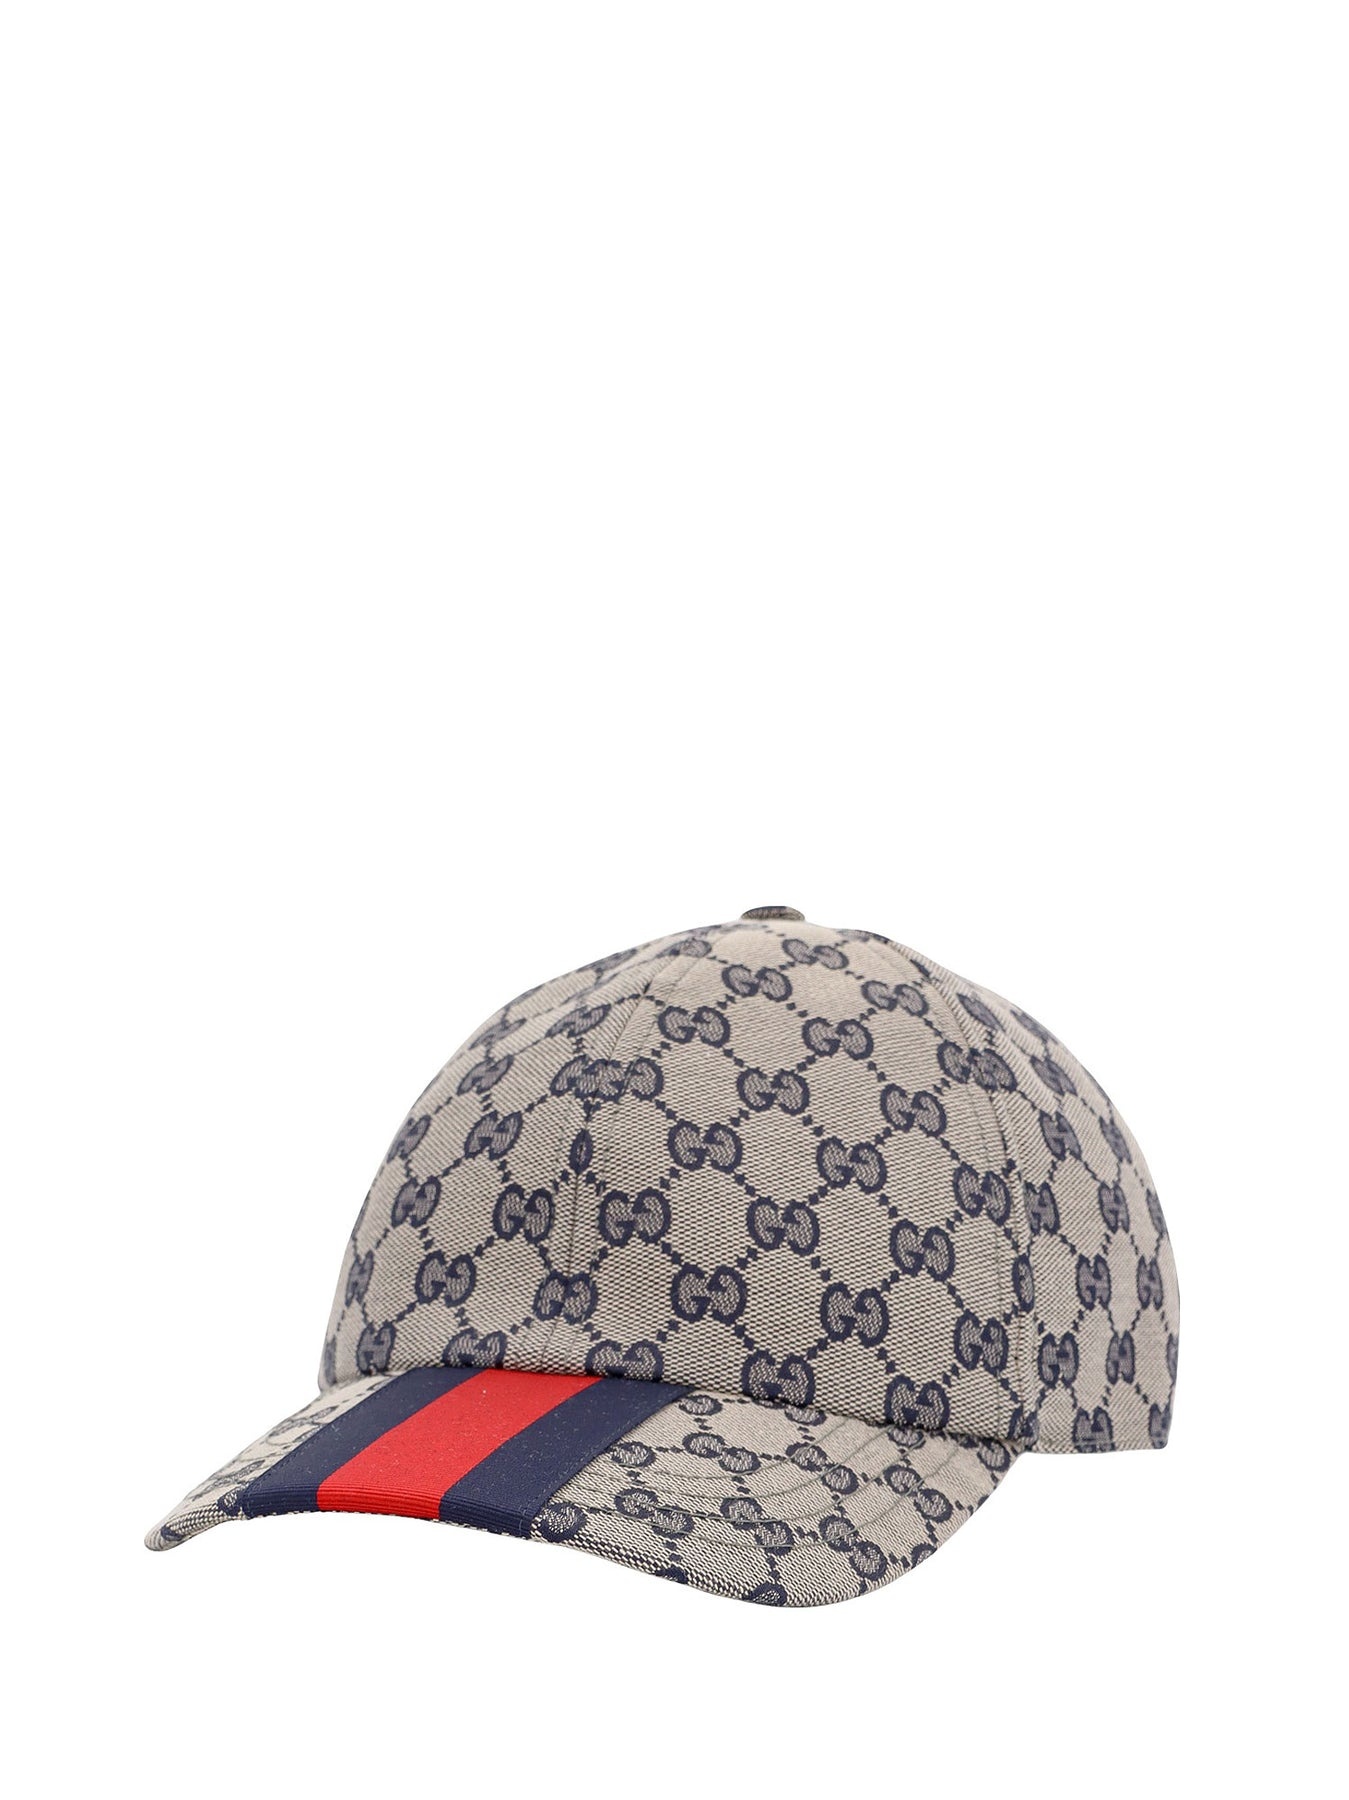 Original GG Fabric hat - 2